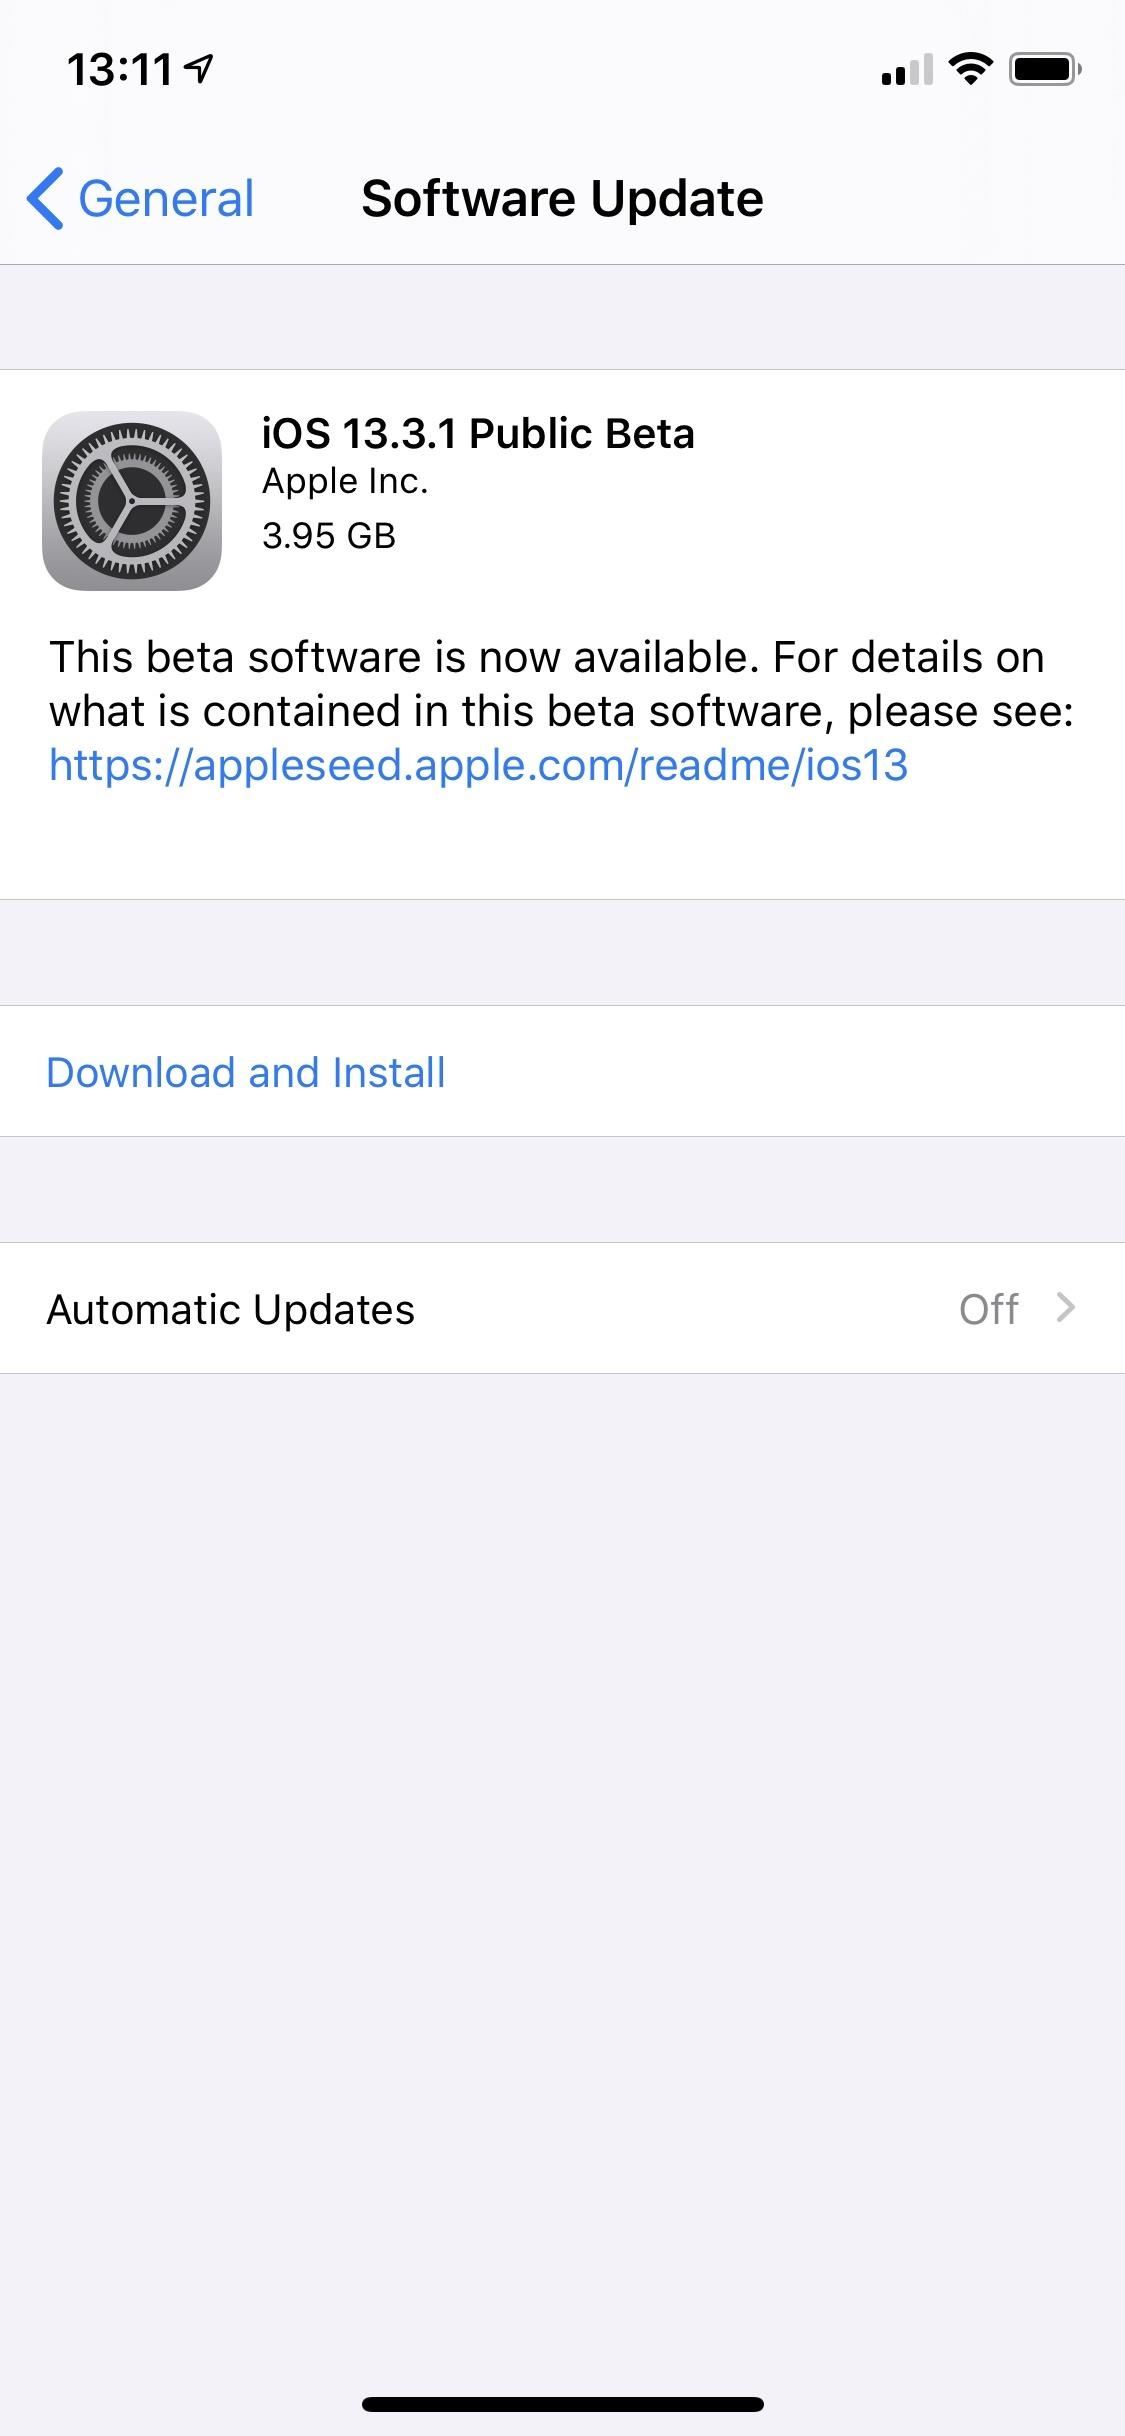 Apple Just Released iOS 13.3.1 Public Beta 1 for iPhone